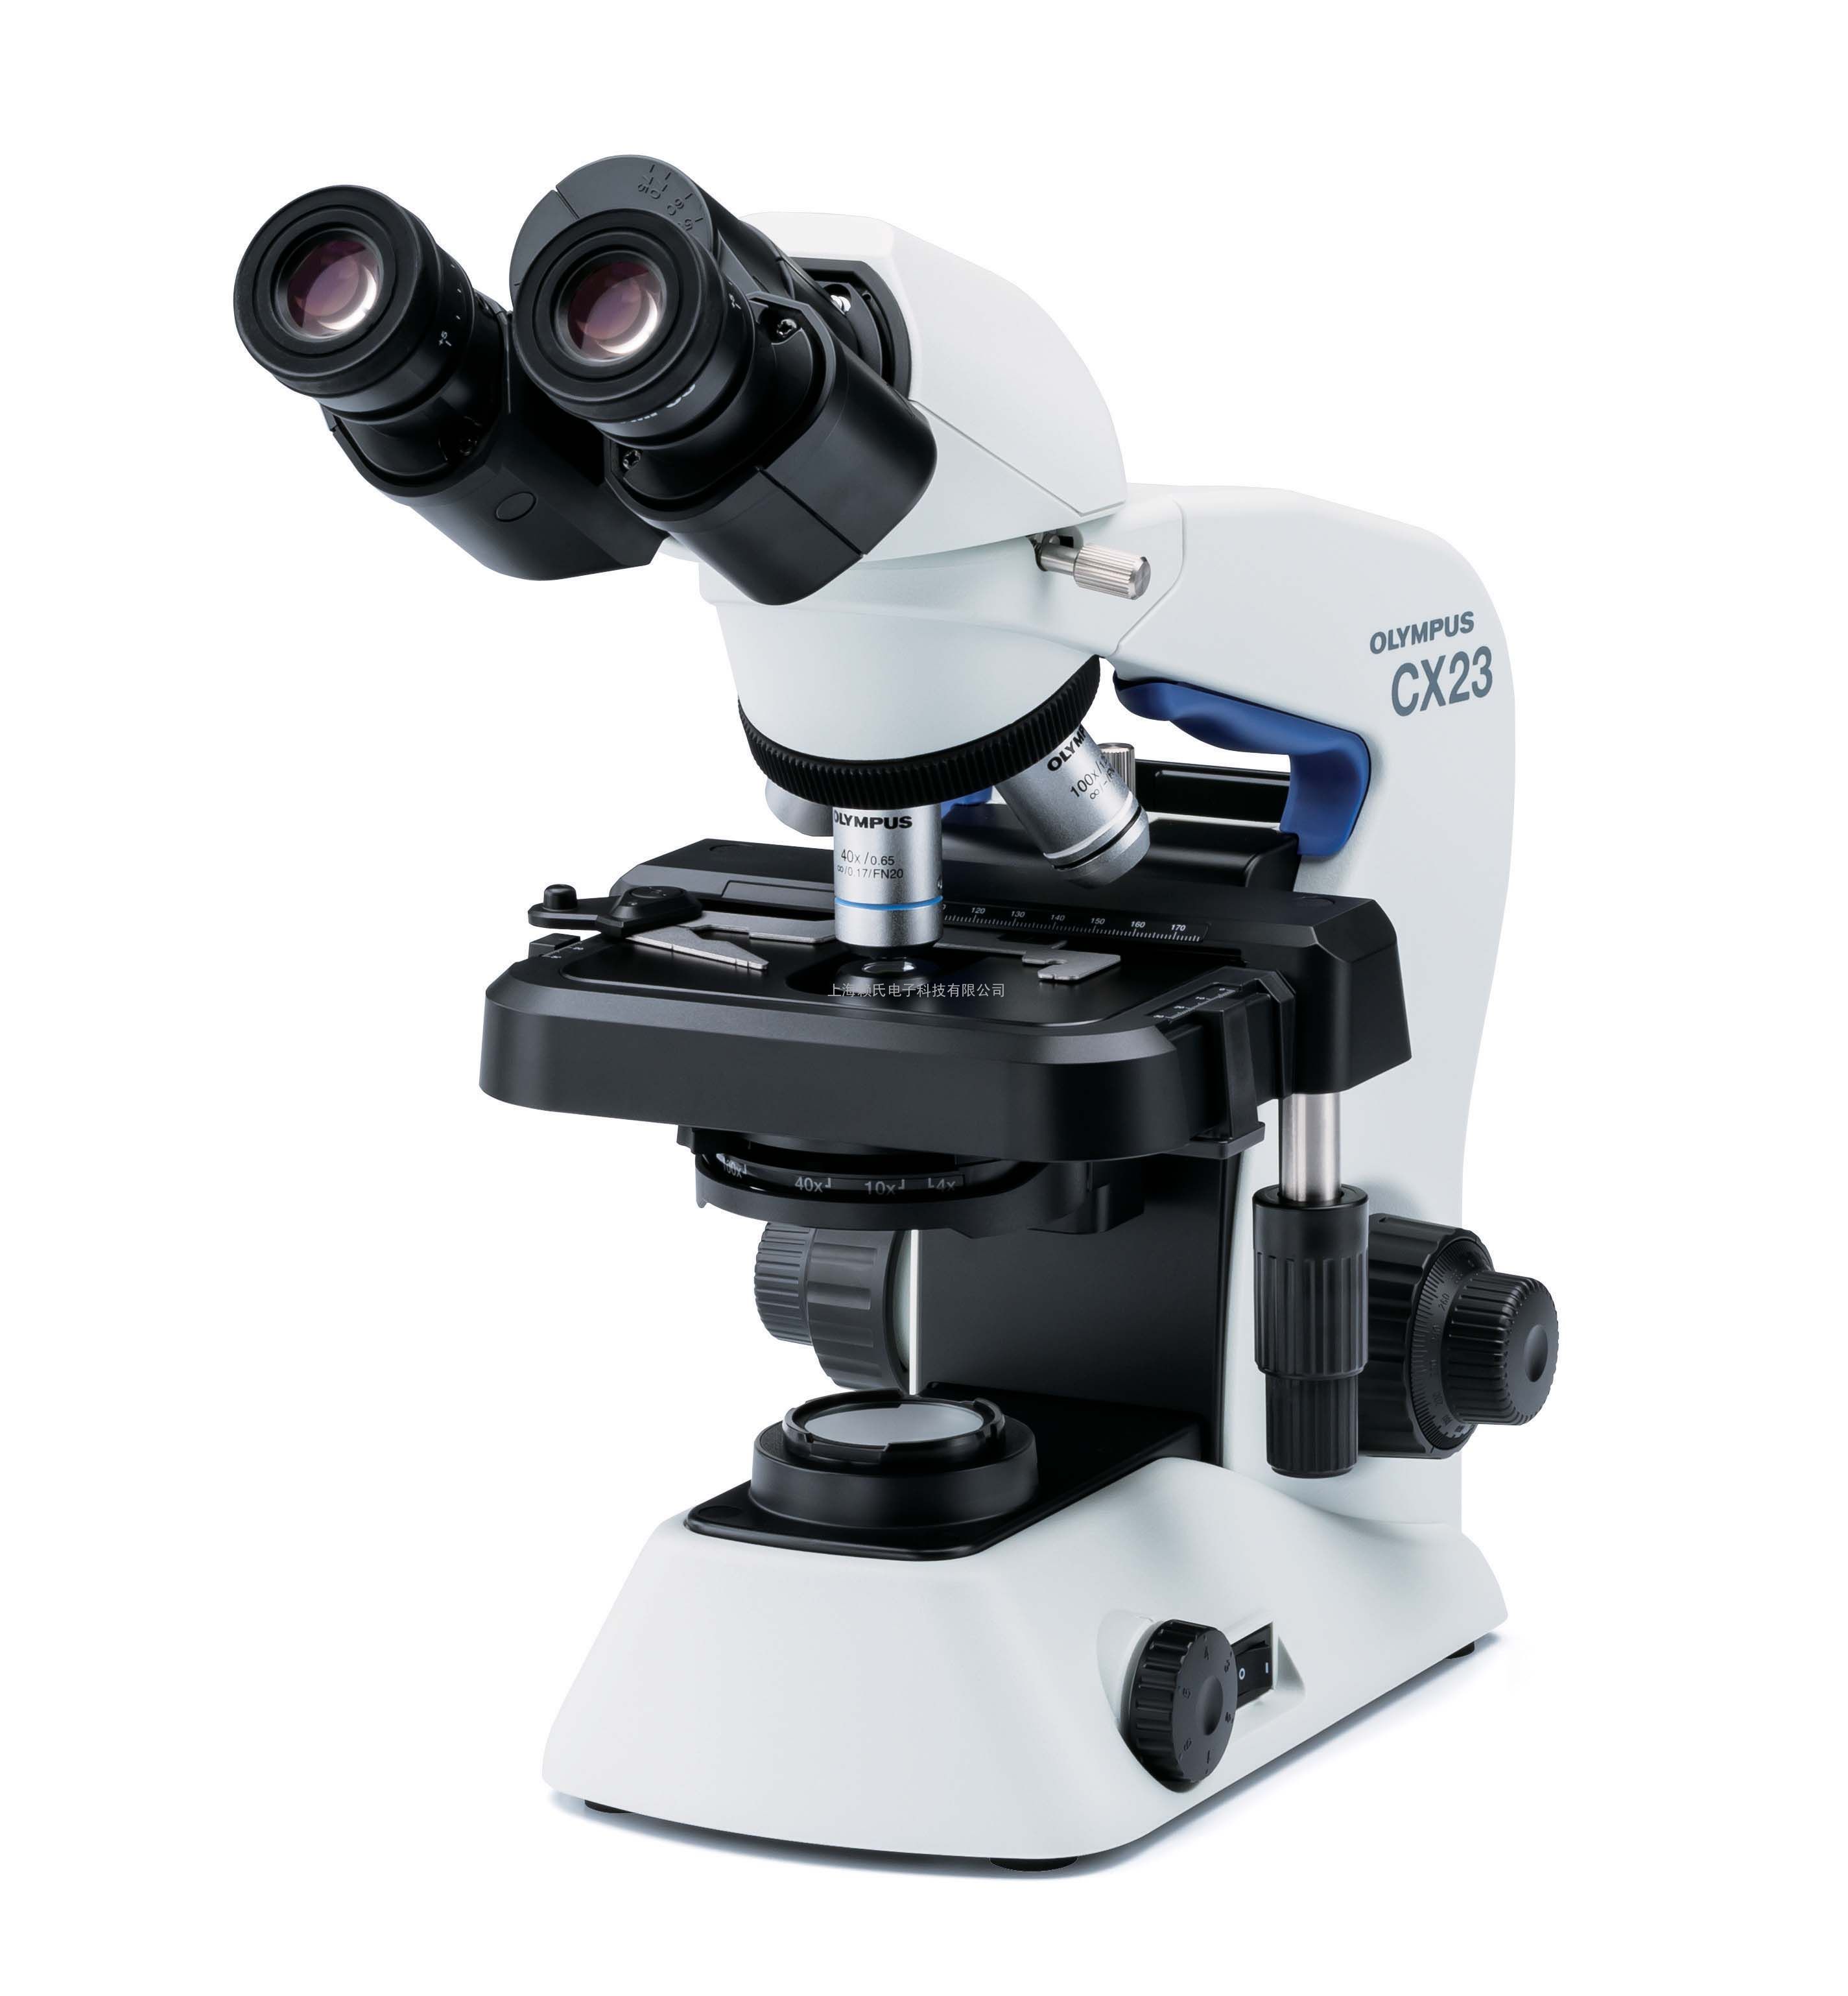 Микроскоп Olympus CX23: главные характеристики и особенности